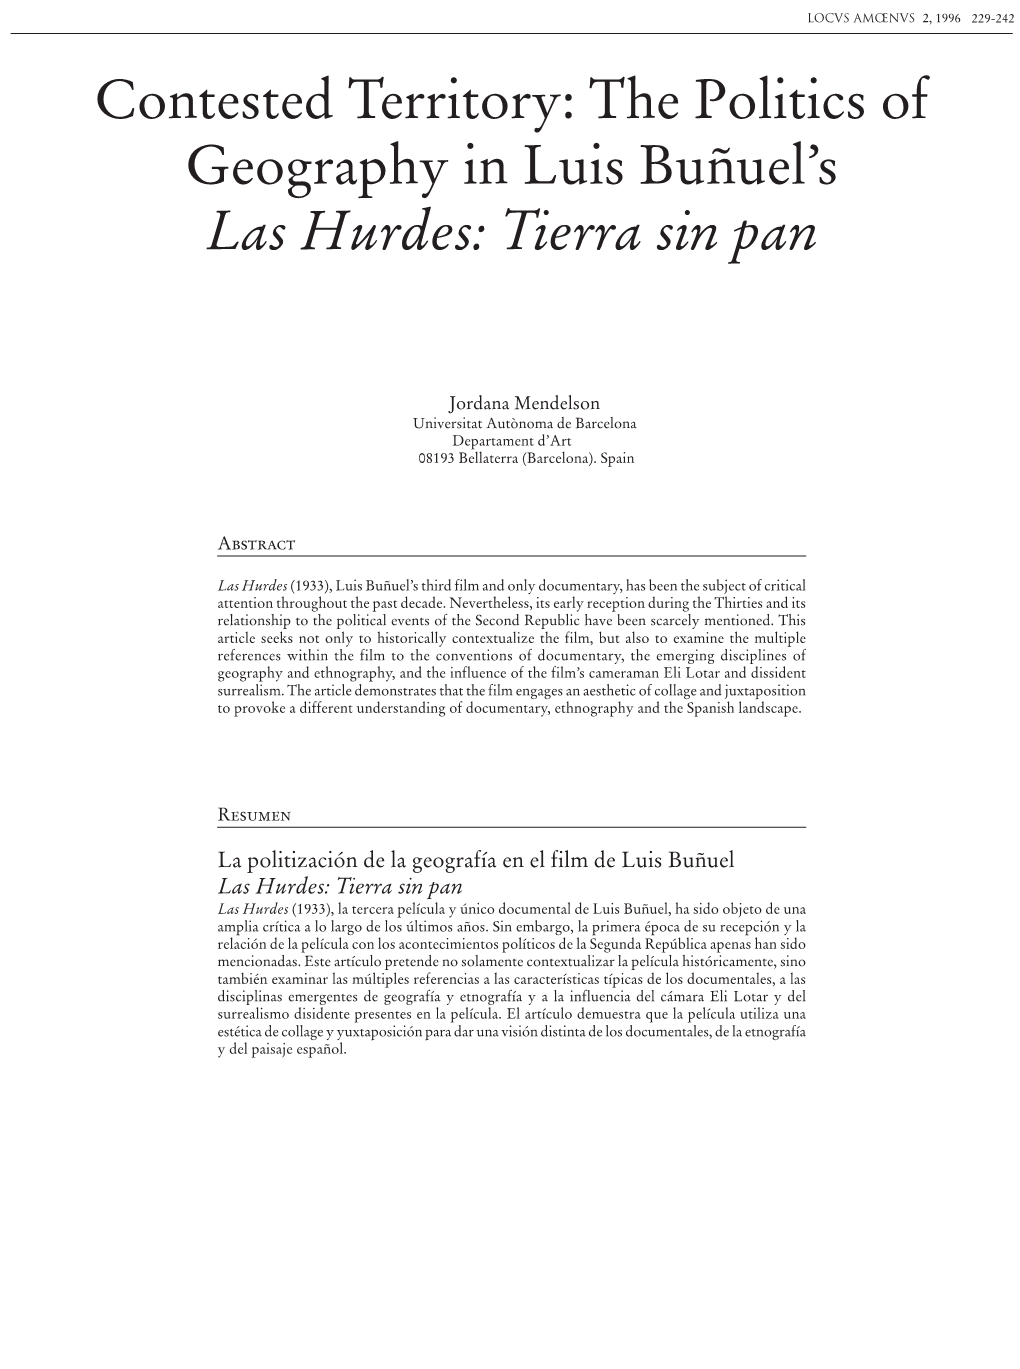 Contested Territory: the Politics of Geography in Luis Buñuel's Las Hurdes: Tierra Sin